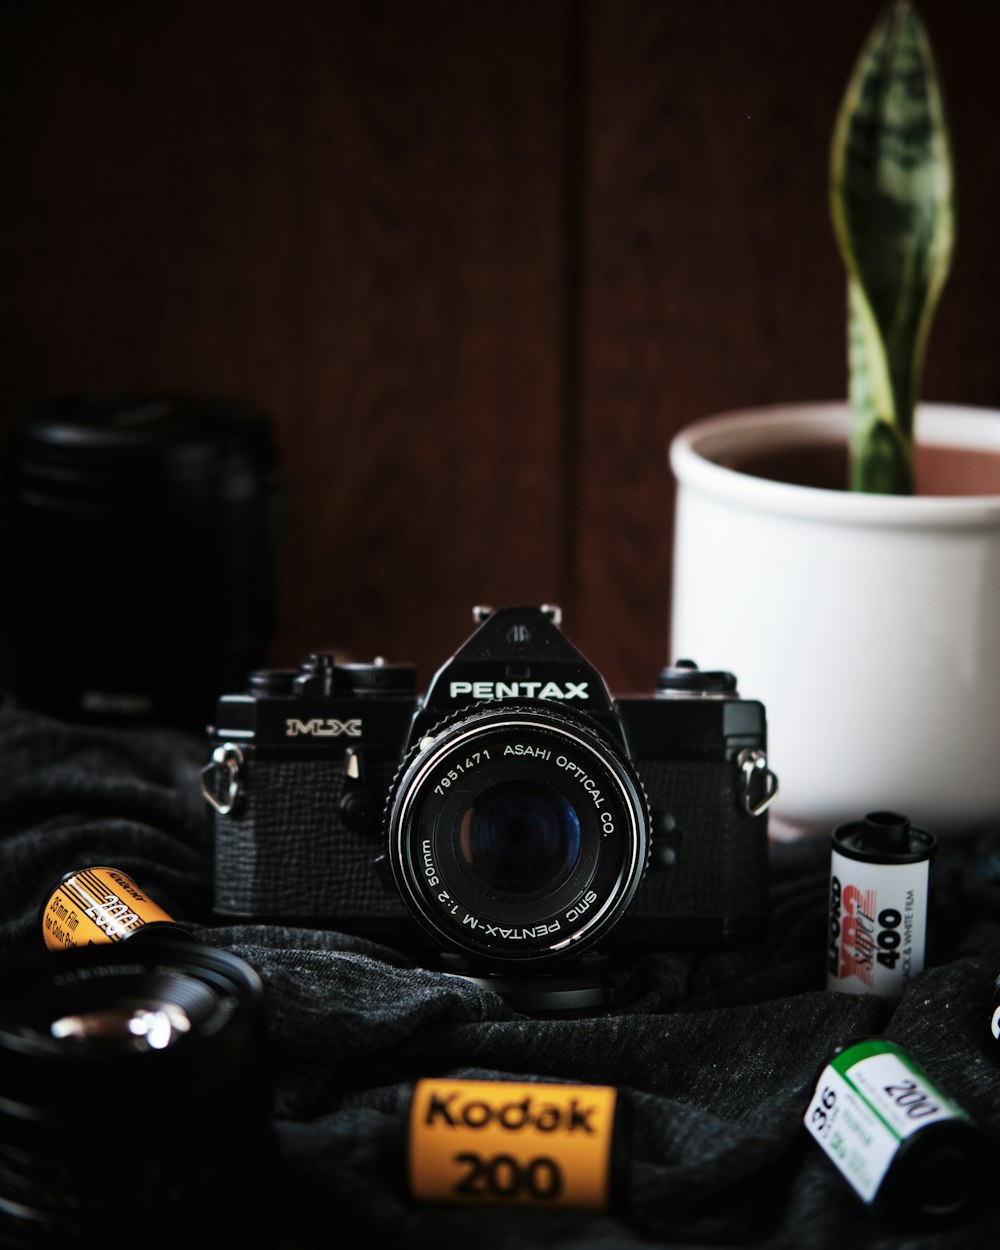 Fotocamera reflex digitale Nikon nera accanto a tazza in ceramica bianca